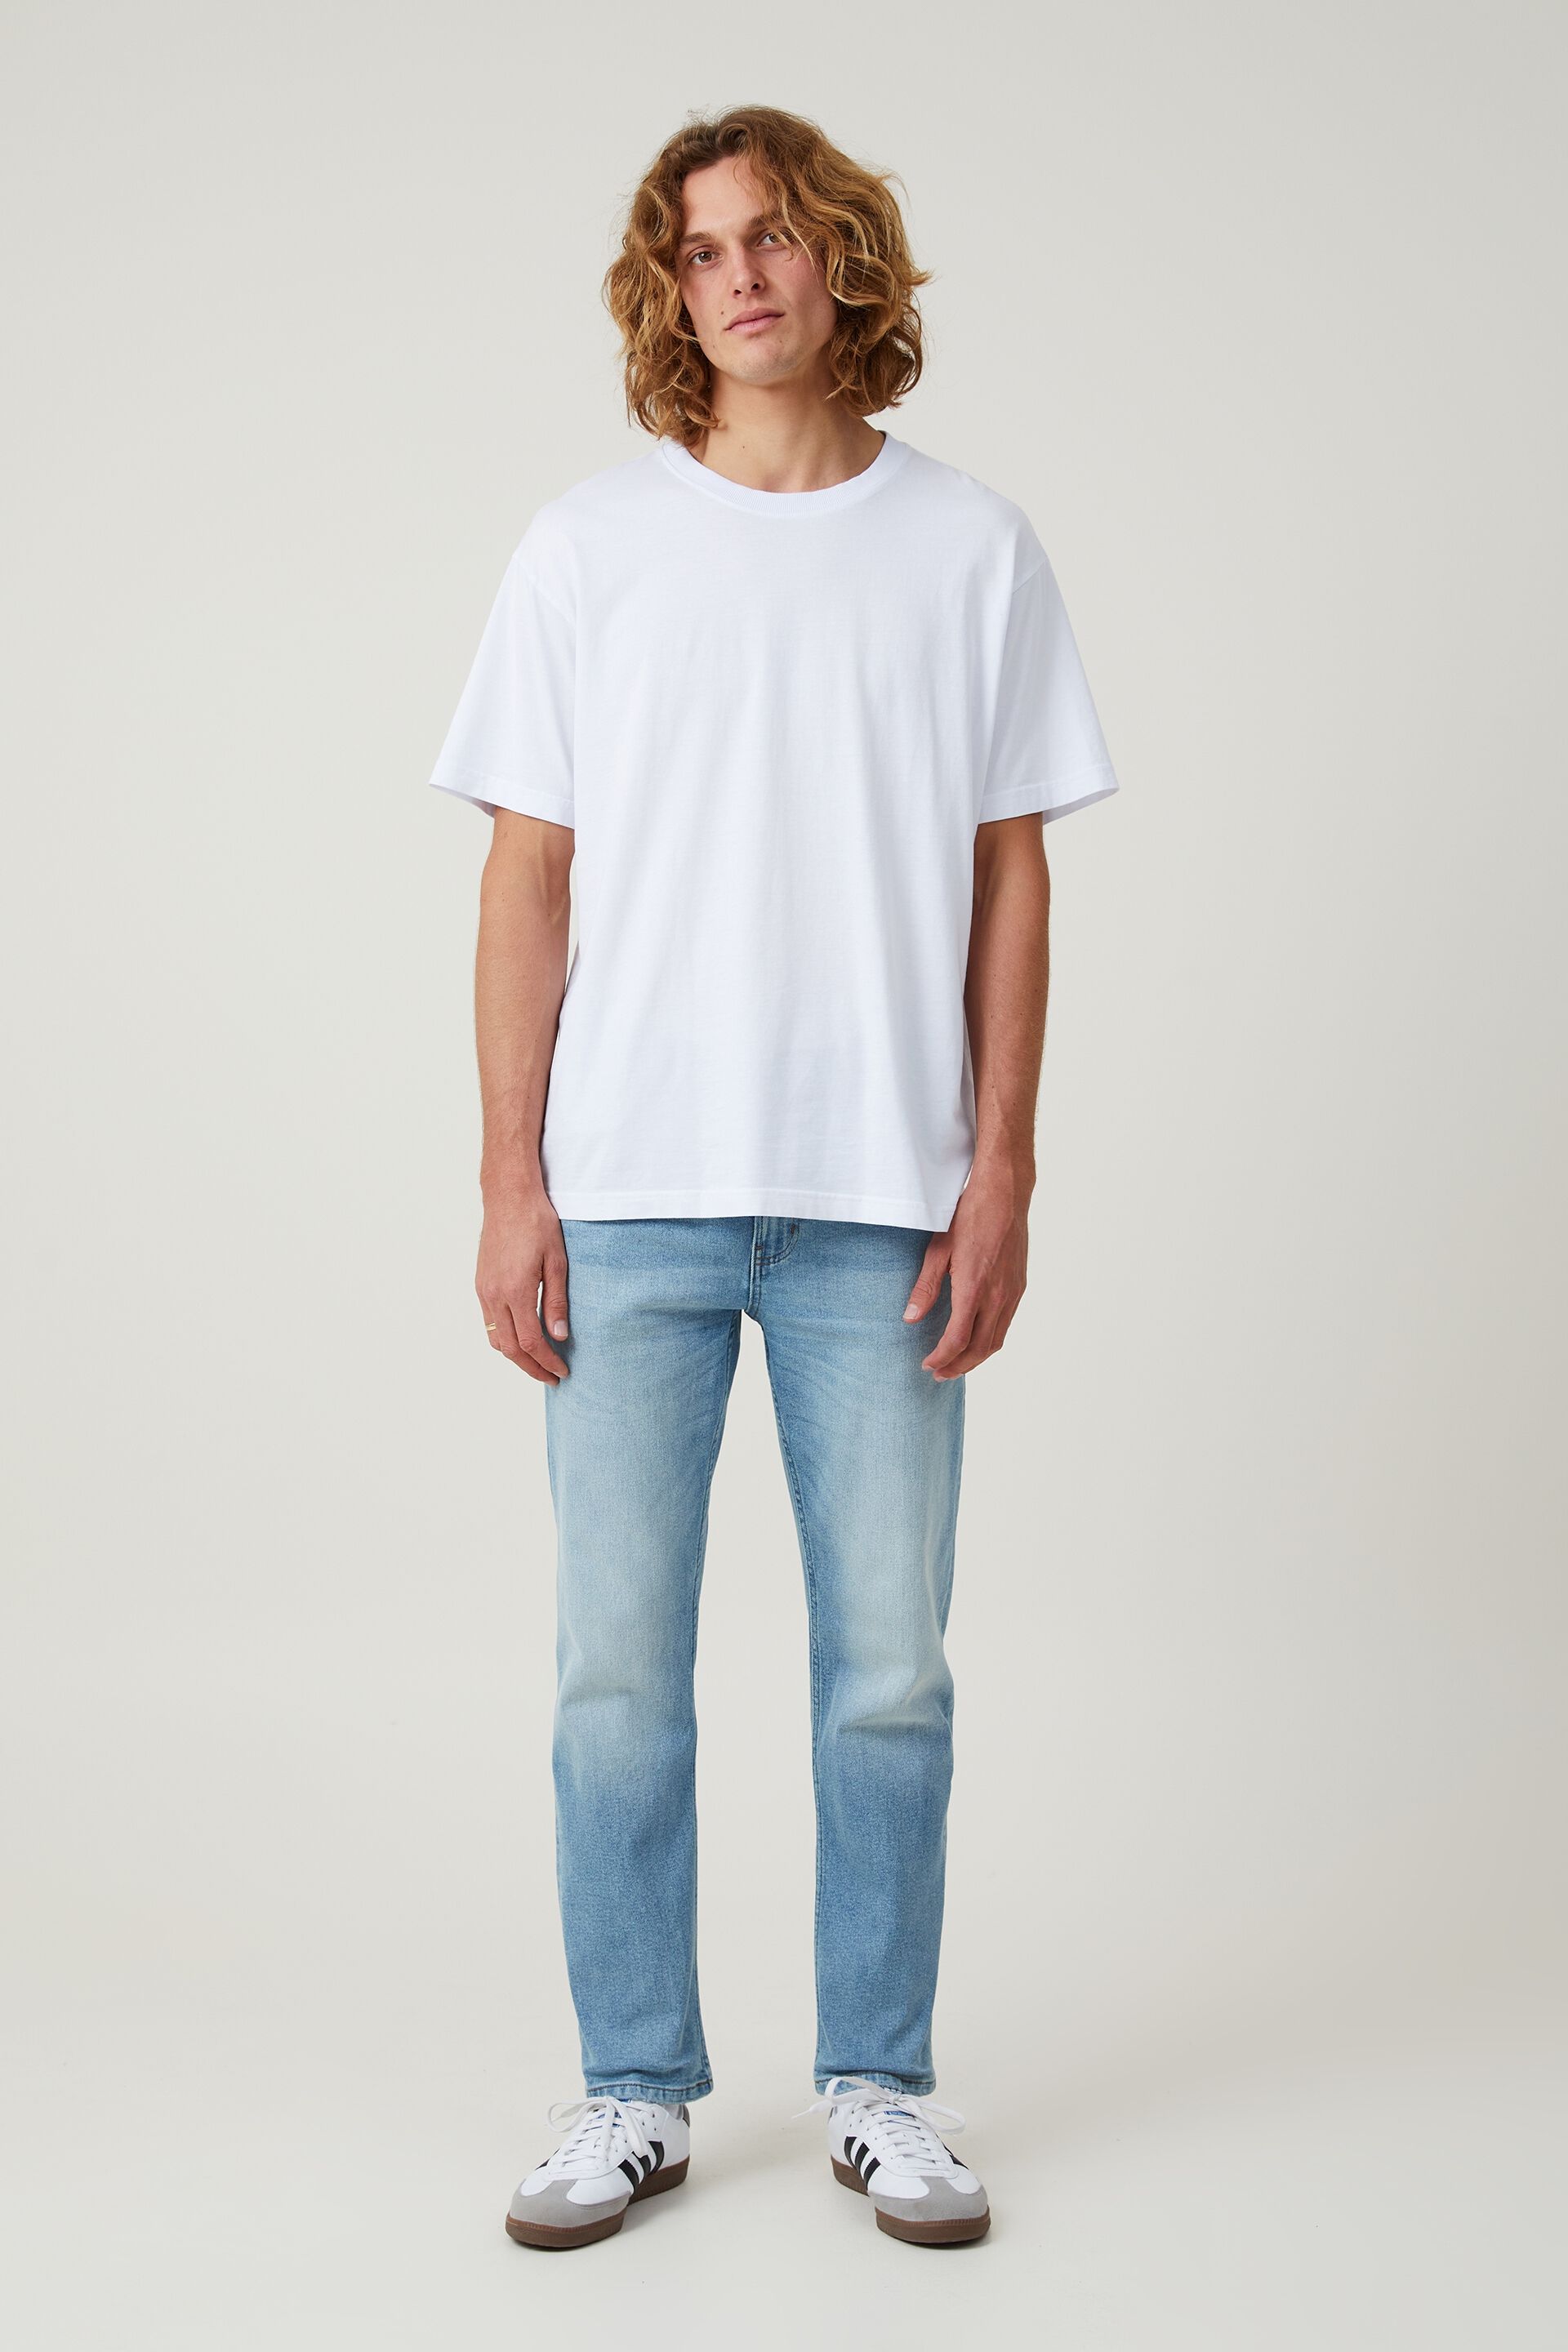 Men's Denim Jeans - On trend styles | Cotton On USA